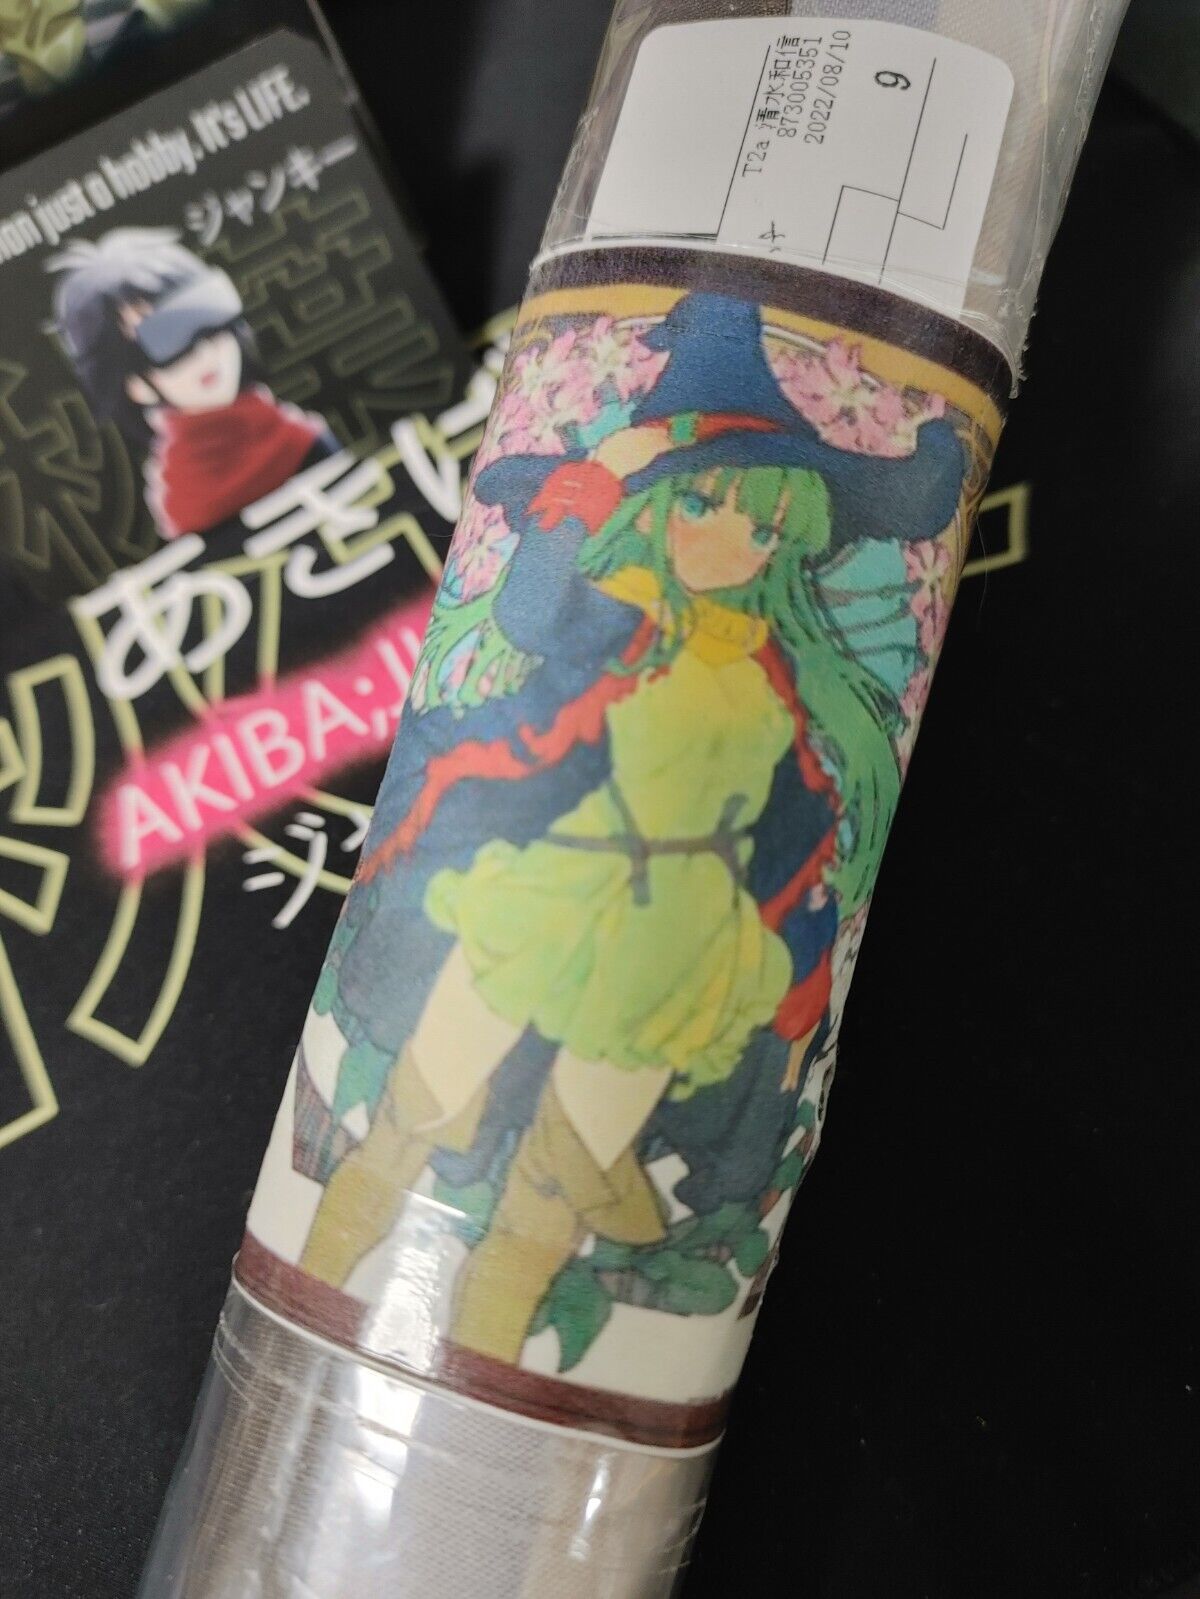 Rance Pc Game Eroge Shizuka Muso tapestry Alicesoft Japan Rare Item!